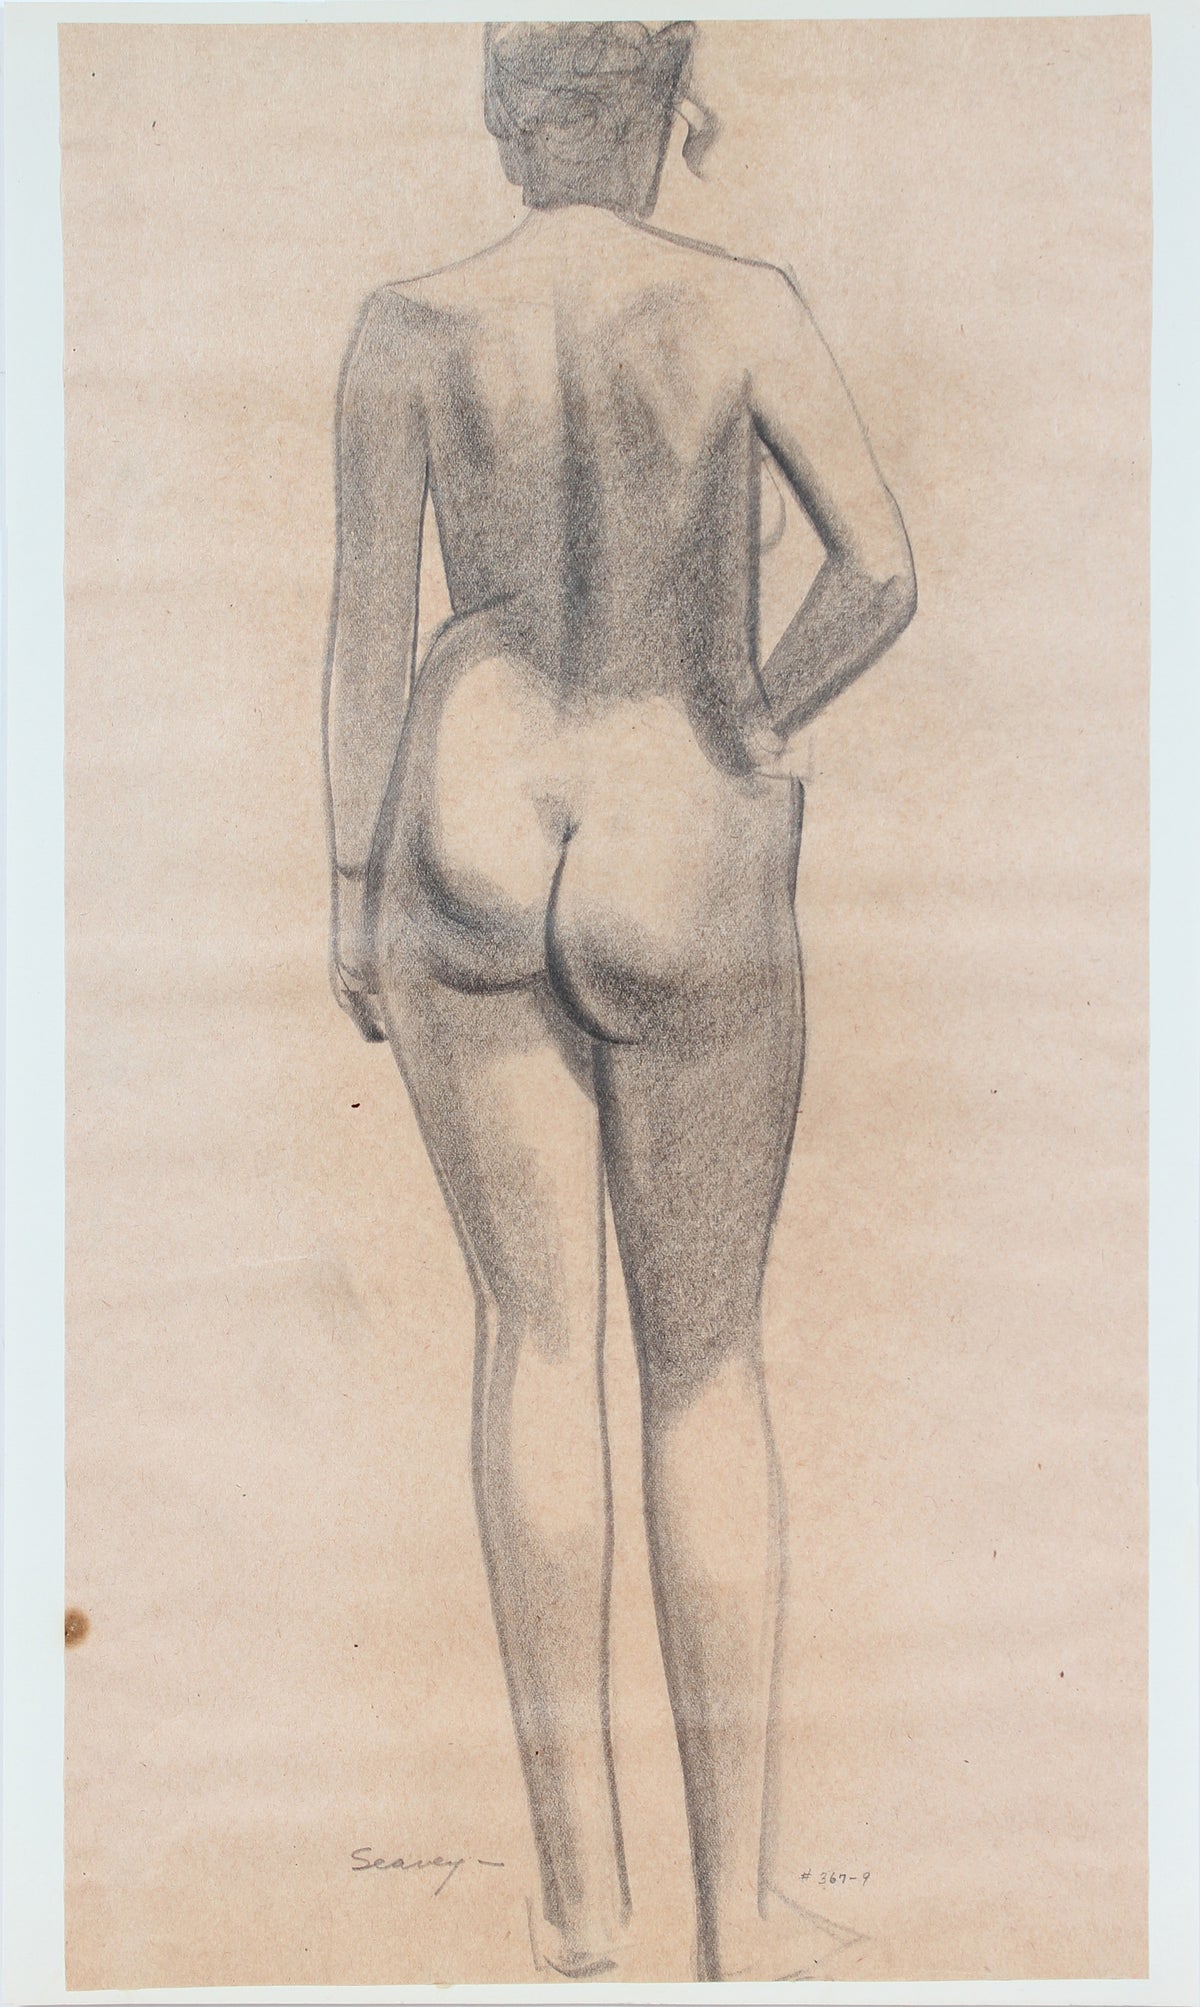 Meditation on a Female Nude from Behind &lt;br&gt;1920-30s Graphite &lt;br&gt;&lt;br&gt;#9400